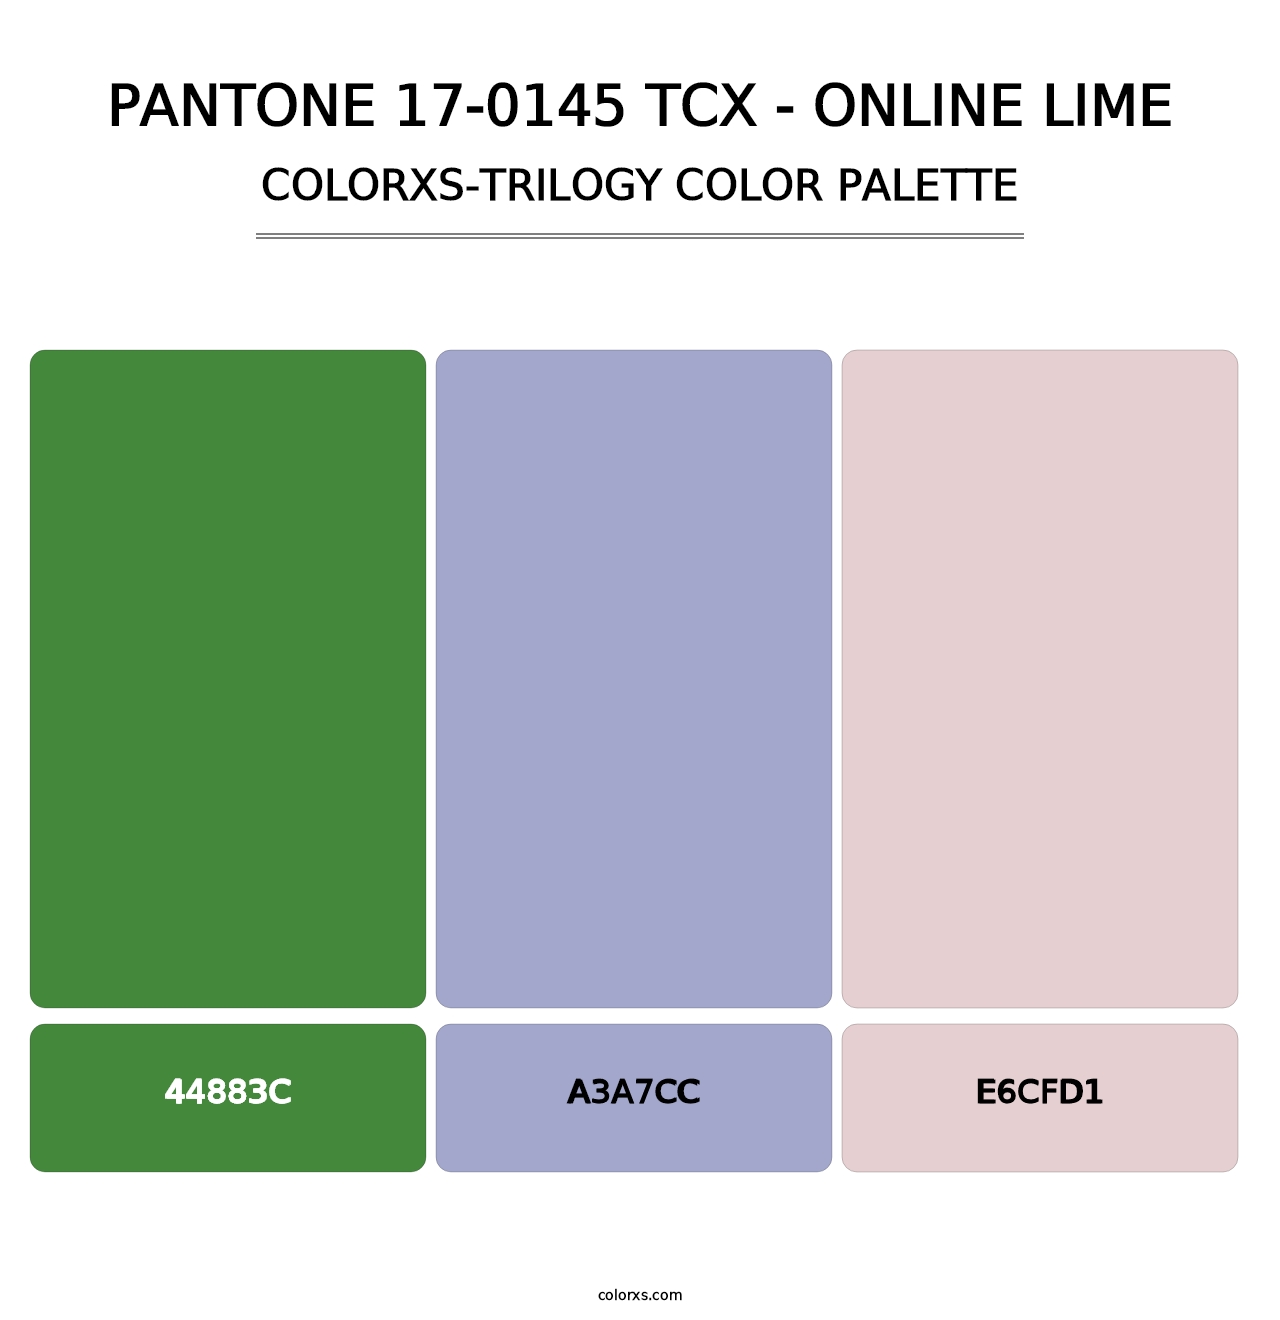 PANTONE 17-0145 TCX - Online Lime - Colorxs Trilogy Palette